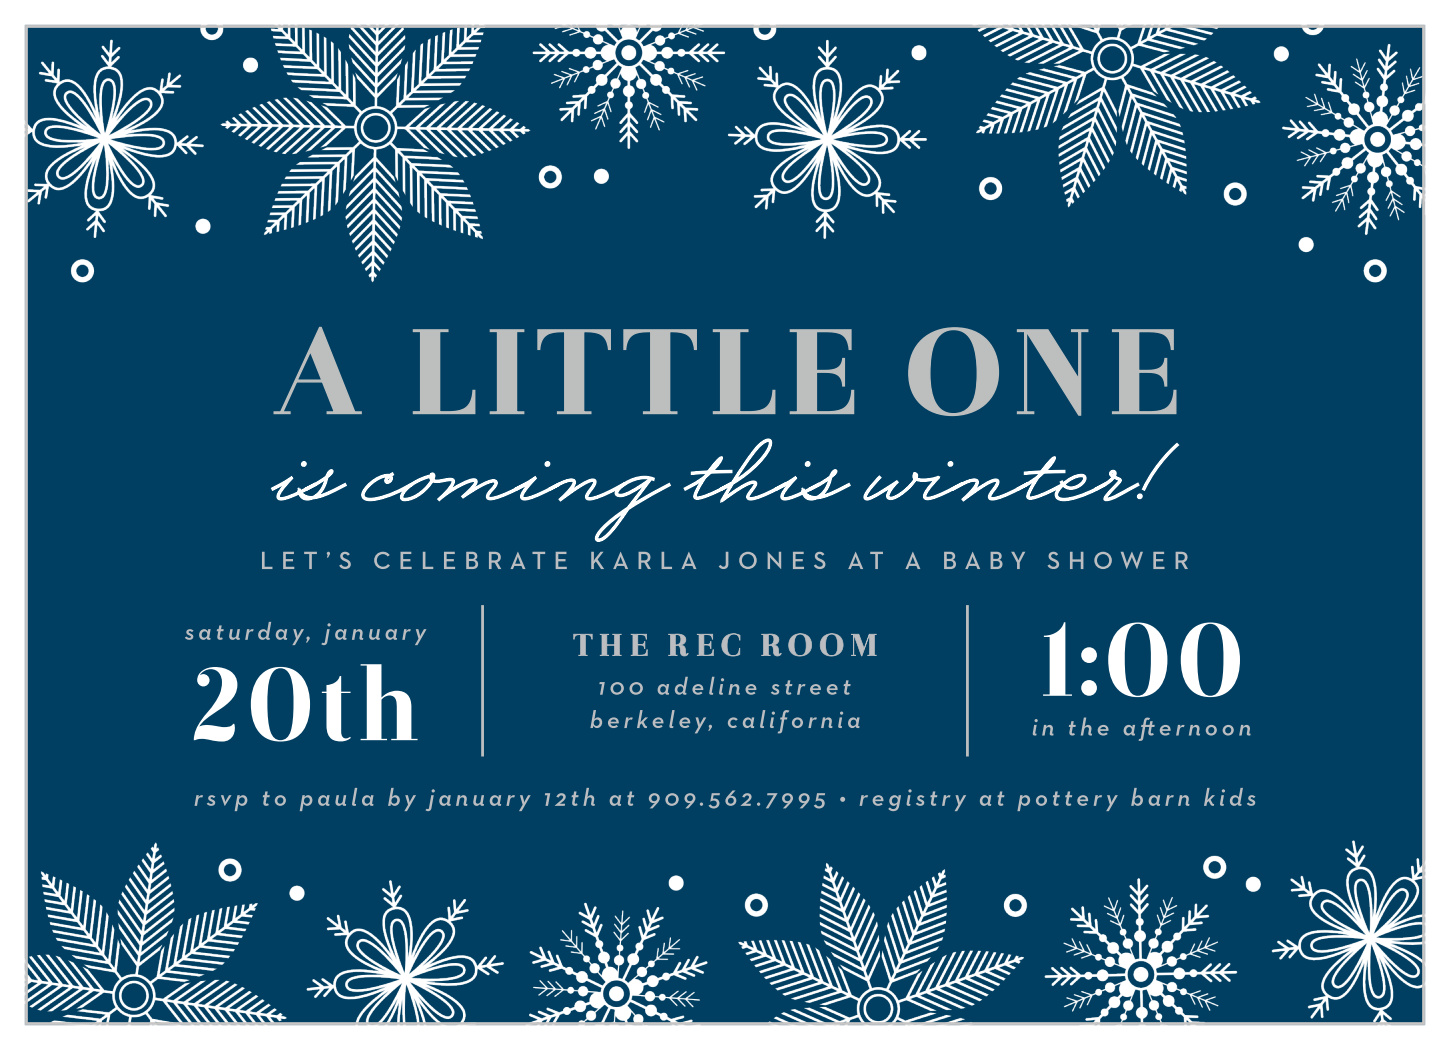 Winter Baby Shower Invitation Template Winter Snowflake Invite Navy Blue Shower Invite Baby It's Cold Outside Invite